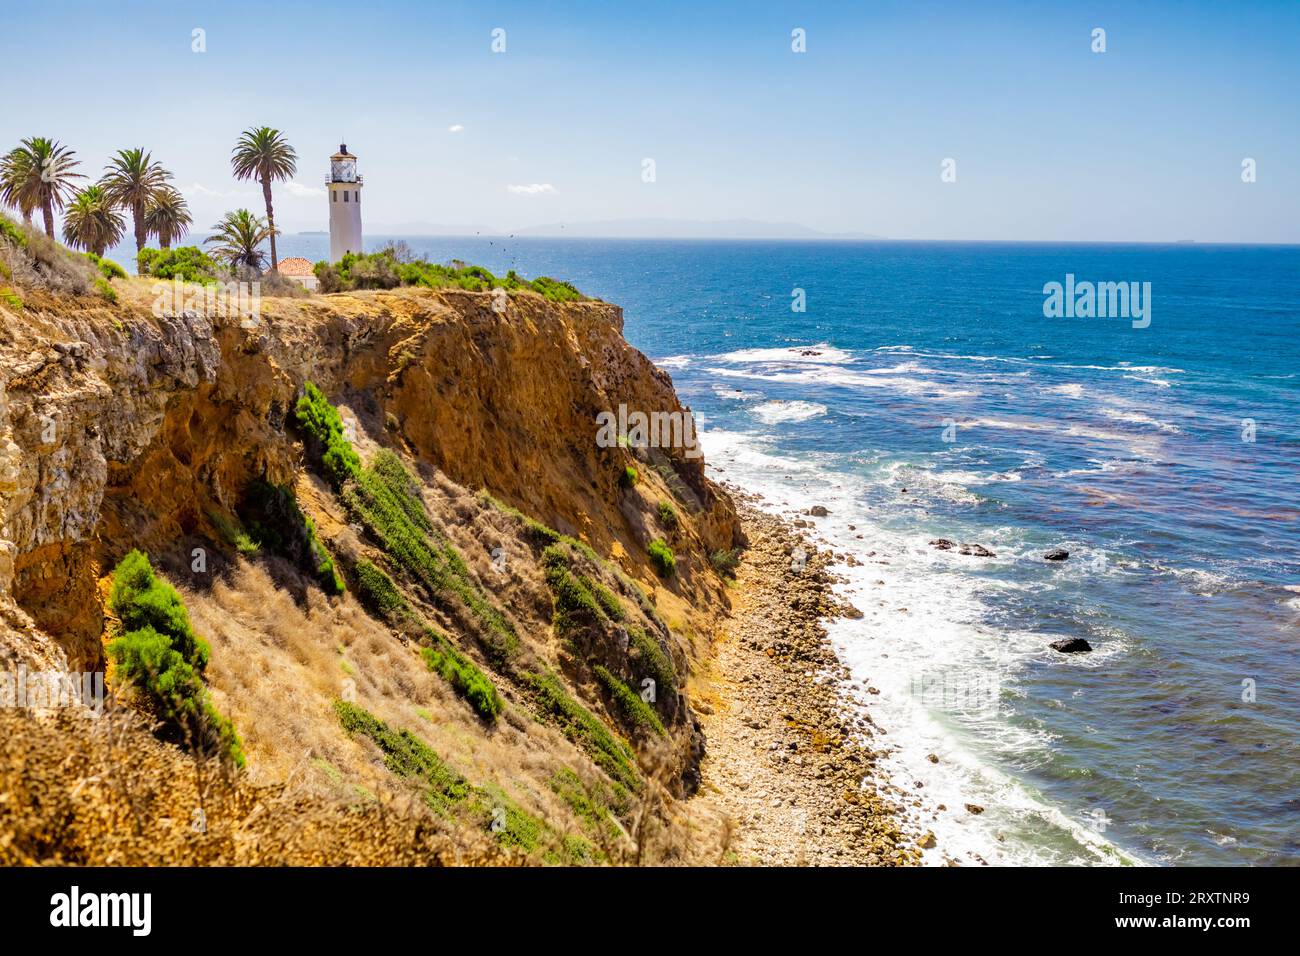 Palos Verdes coast with lighthouse, California, United States of America, North America Stock Photo